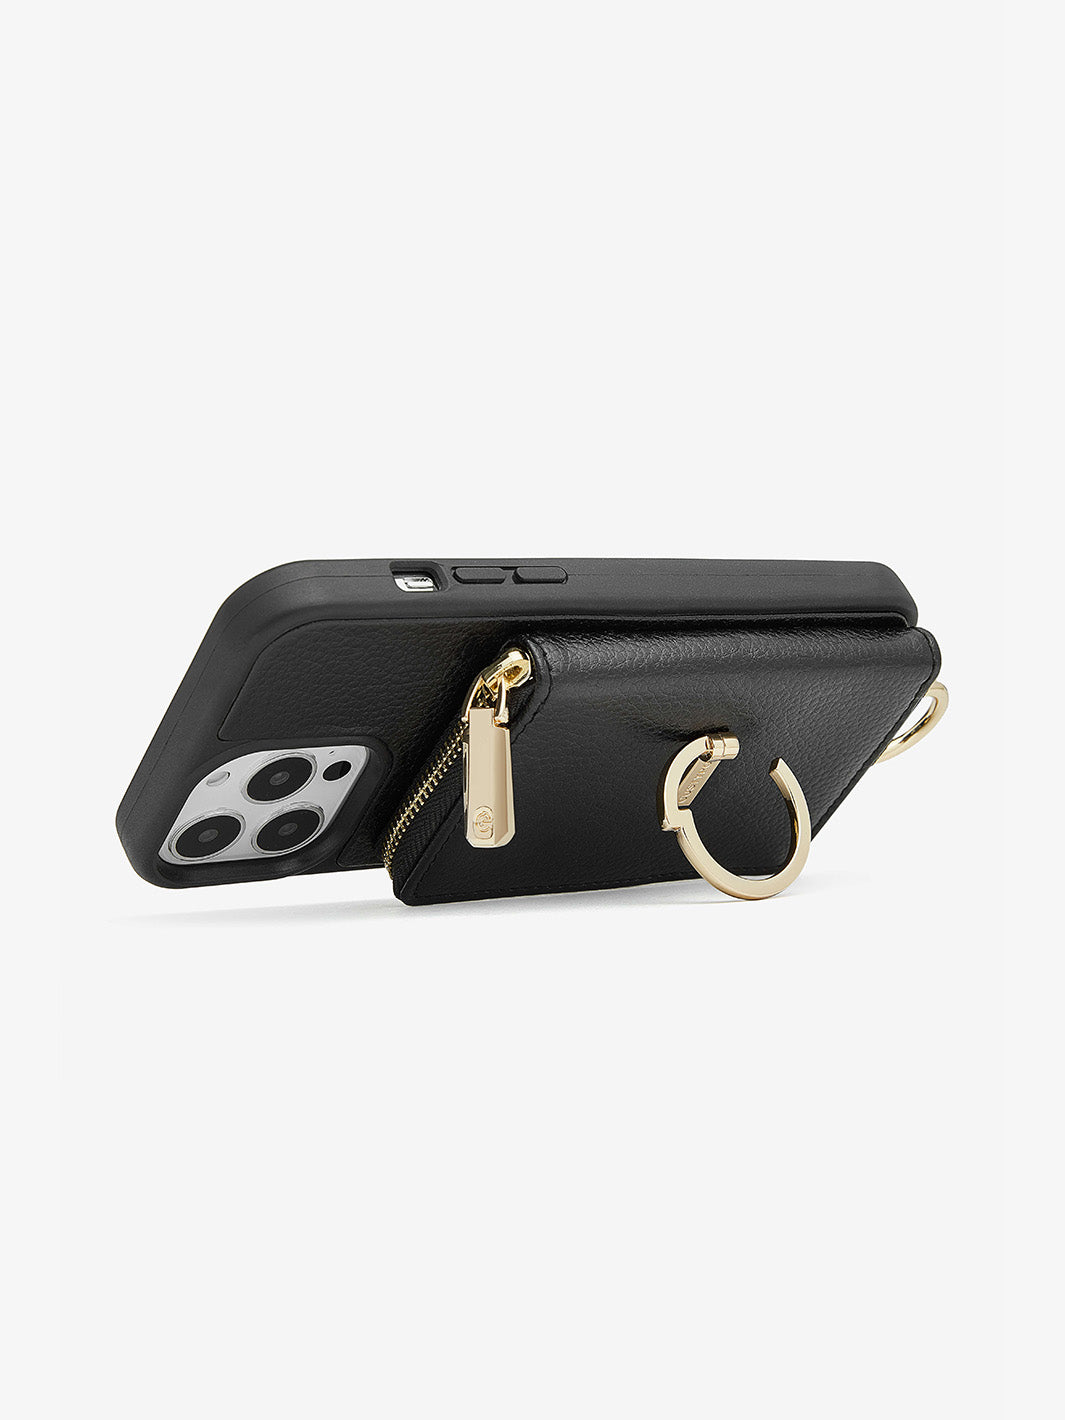 Custype Make Lifestyle-Silk iPhone Wallet Case in black-3